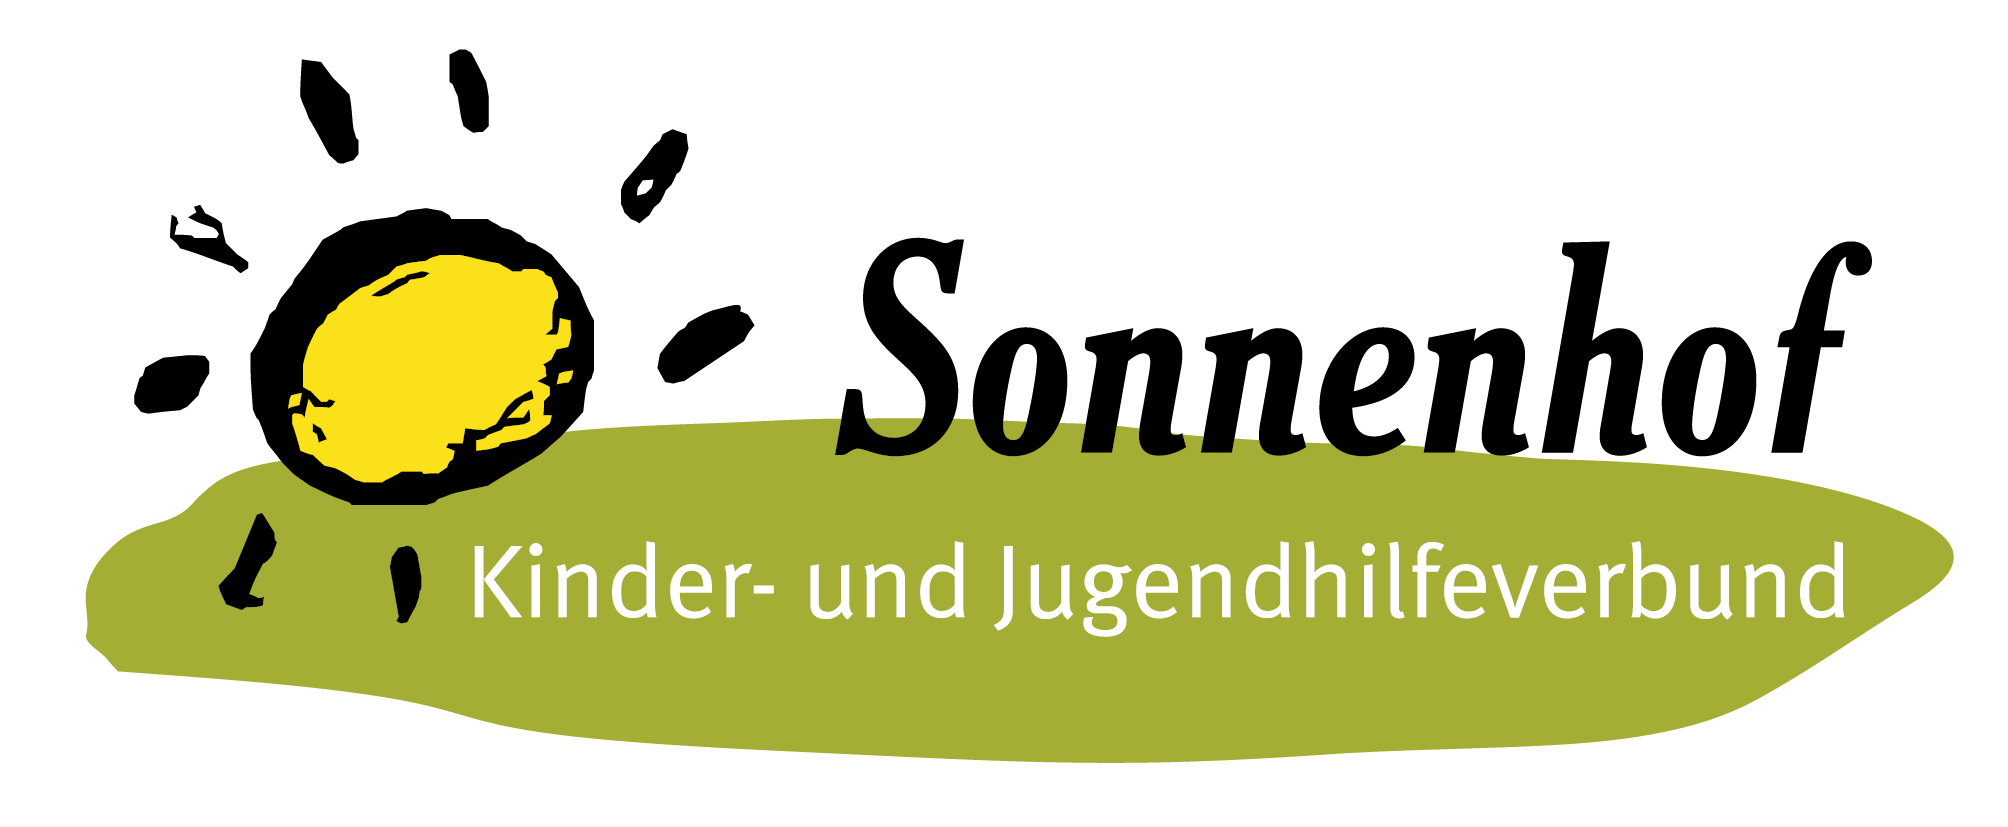 Sonnenhof Logo